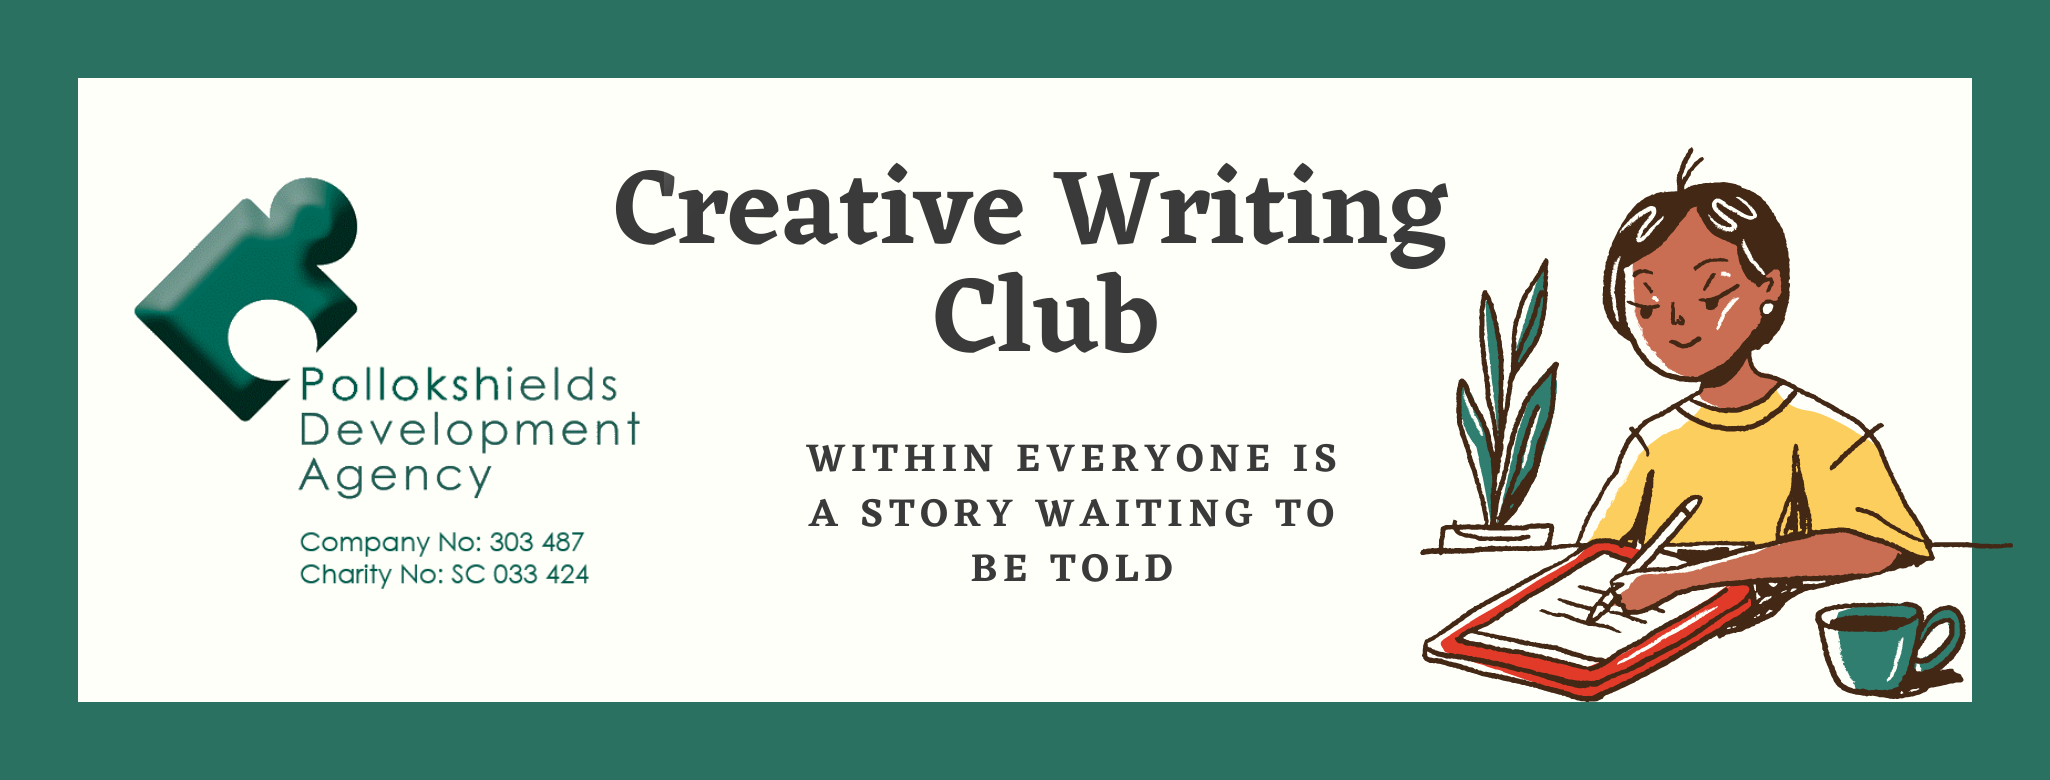 creative writing banner